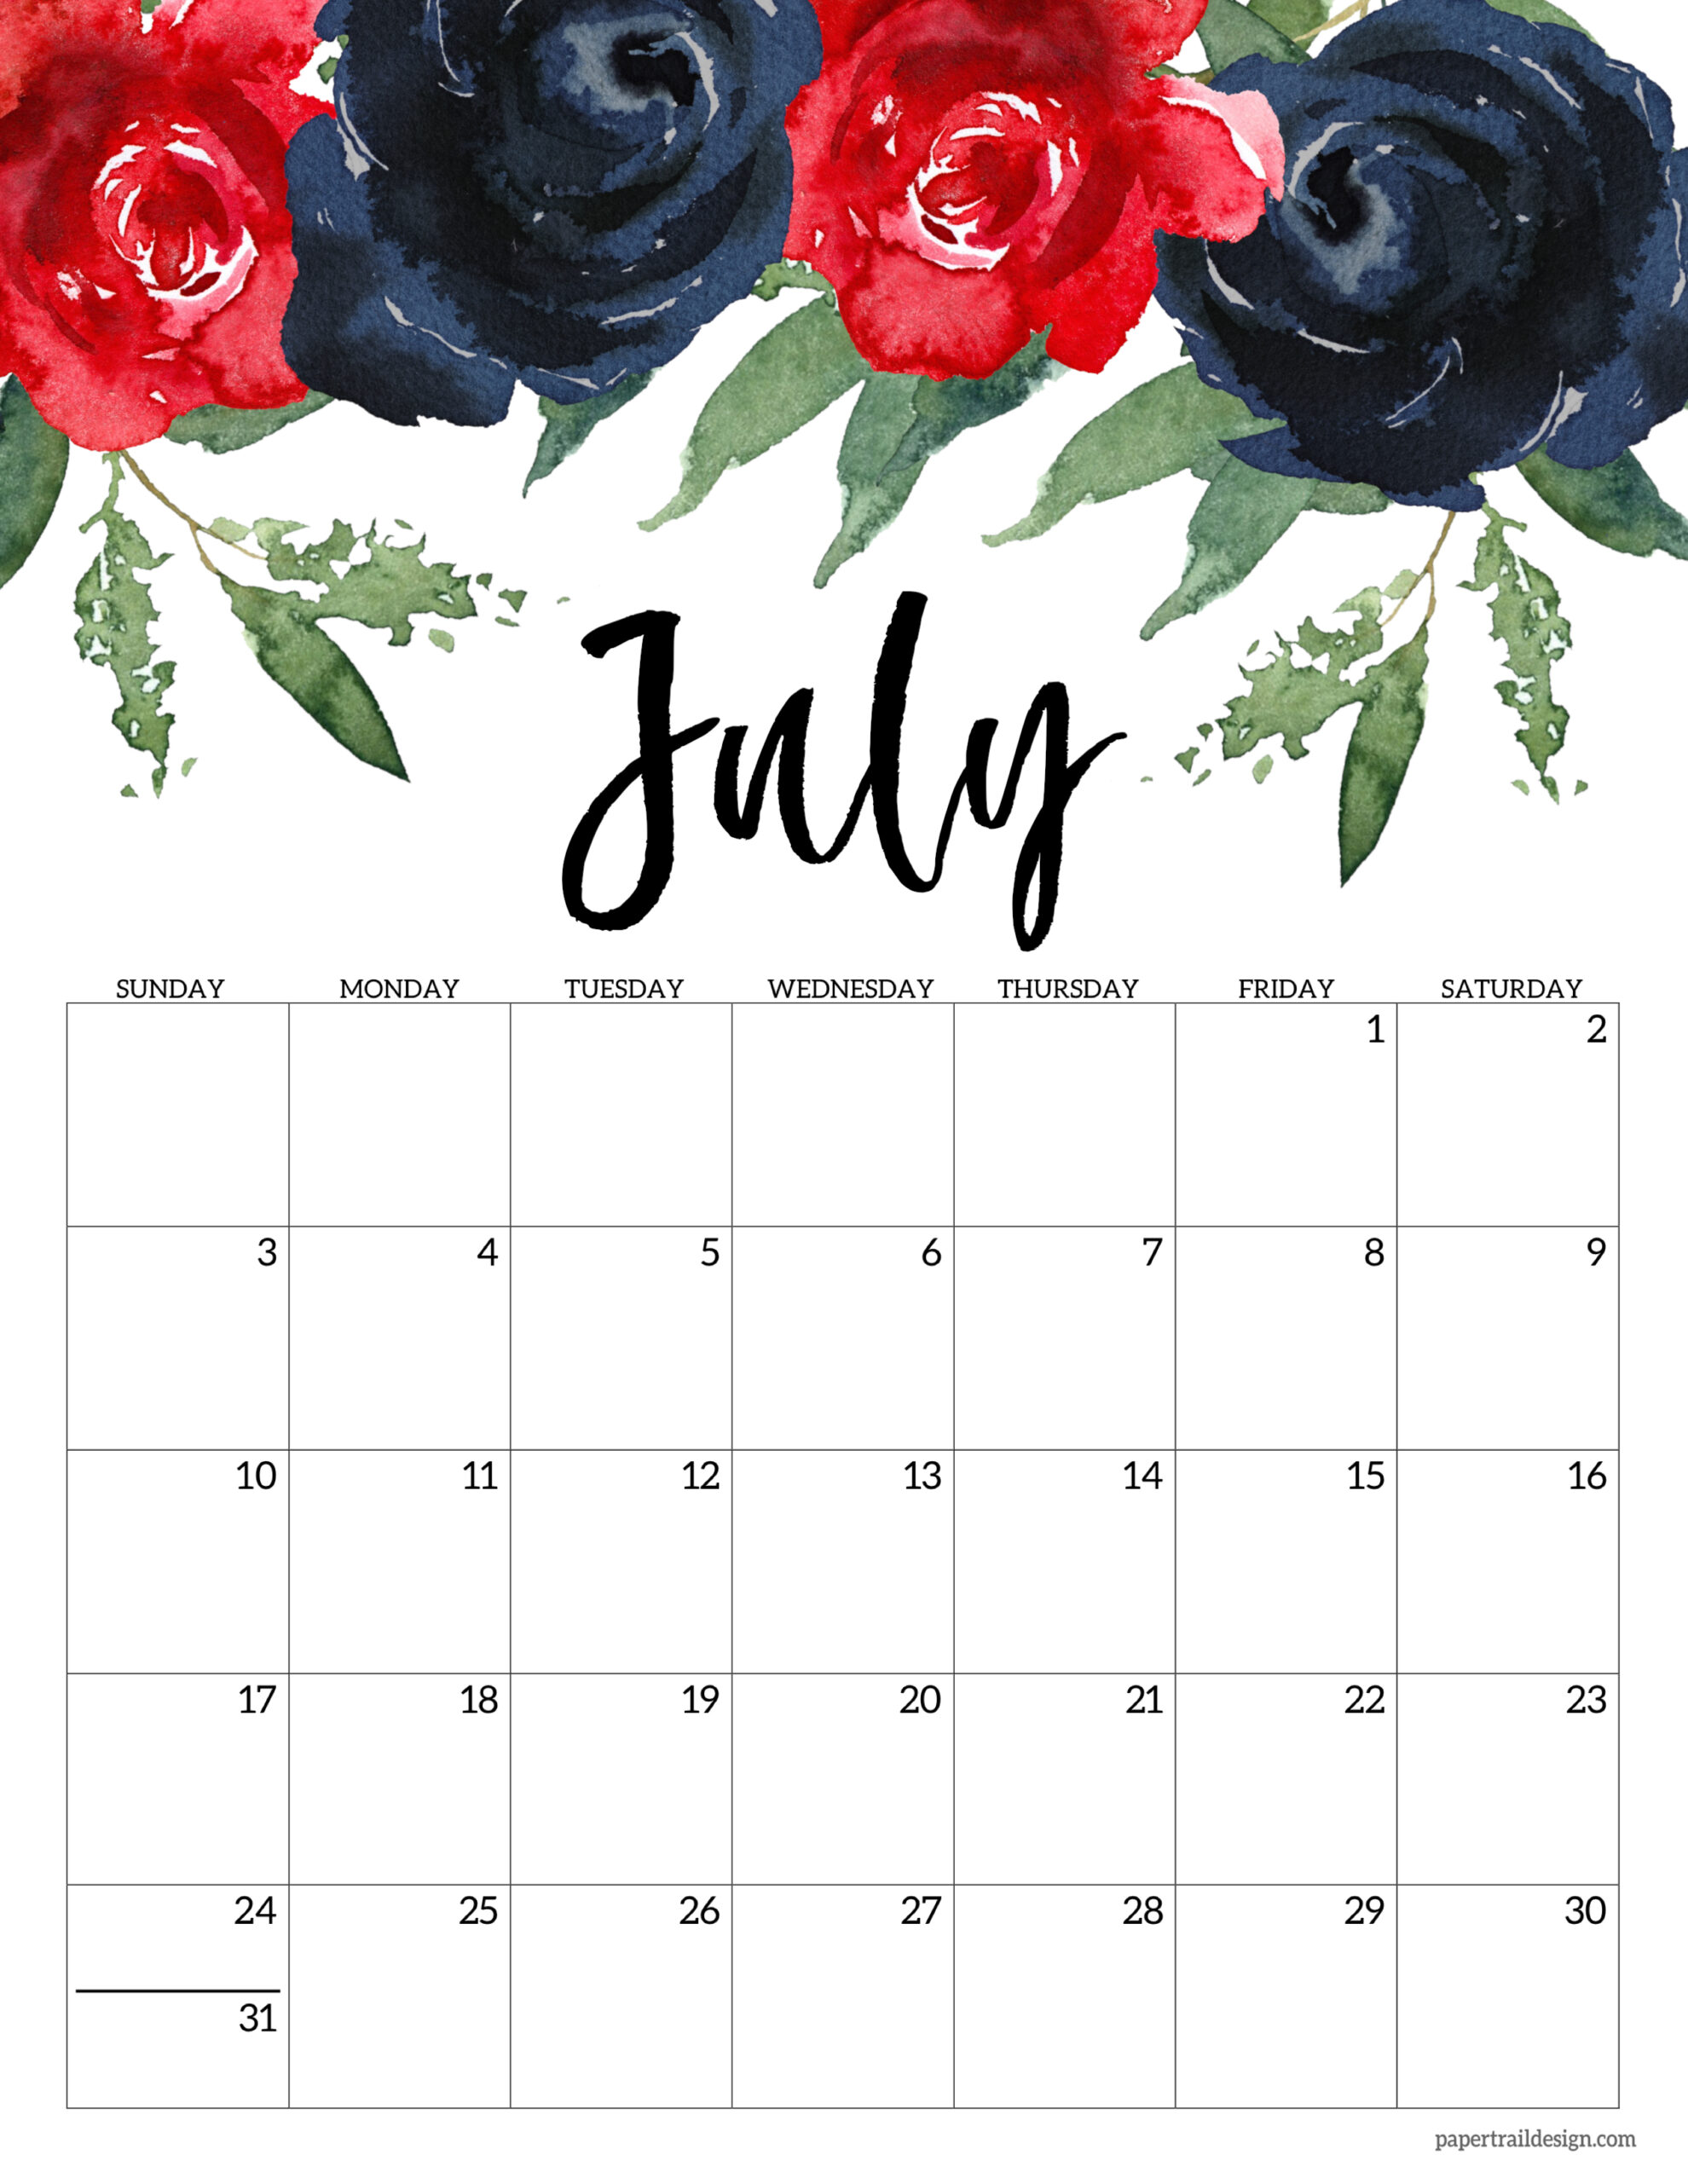 June And July Calendar 2022 Free 2022 Calendar Printable - Floral - Paper Trail Design